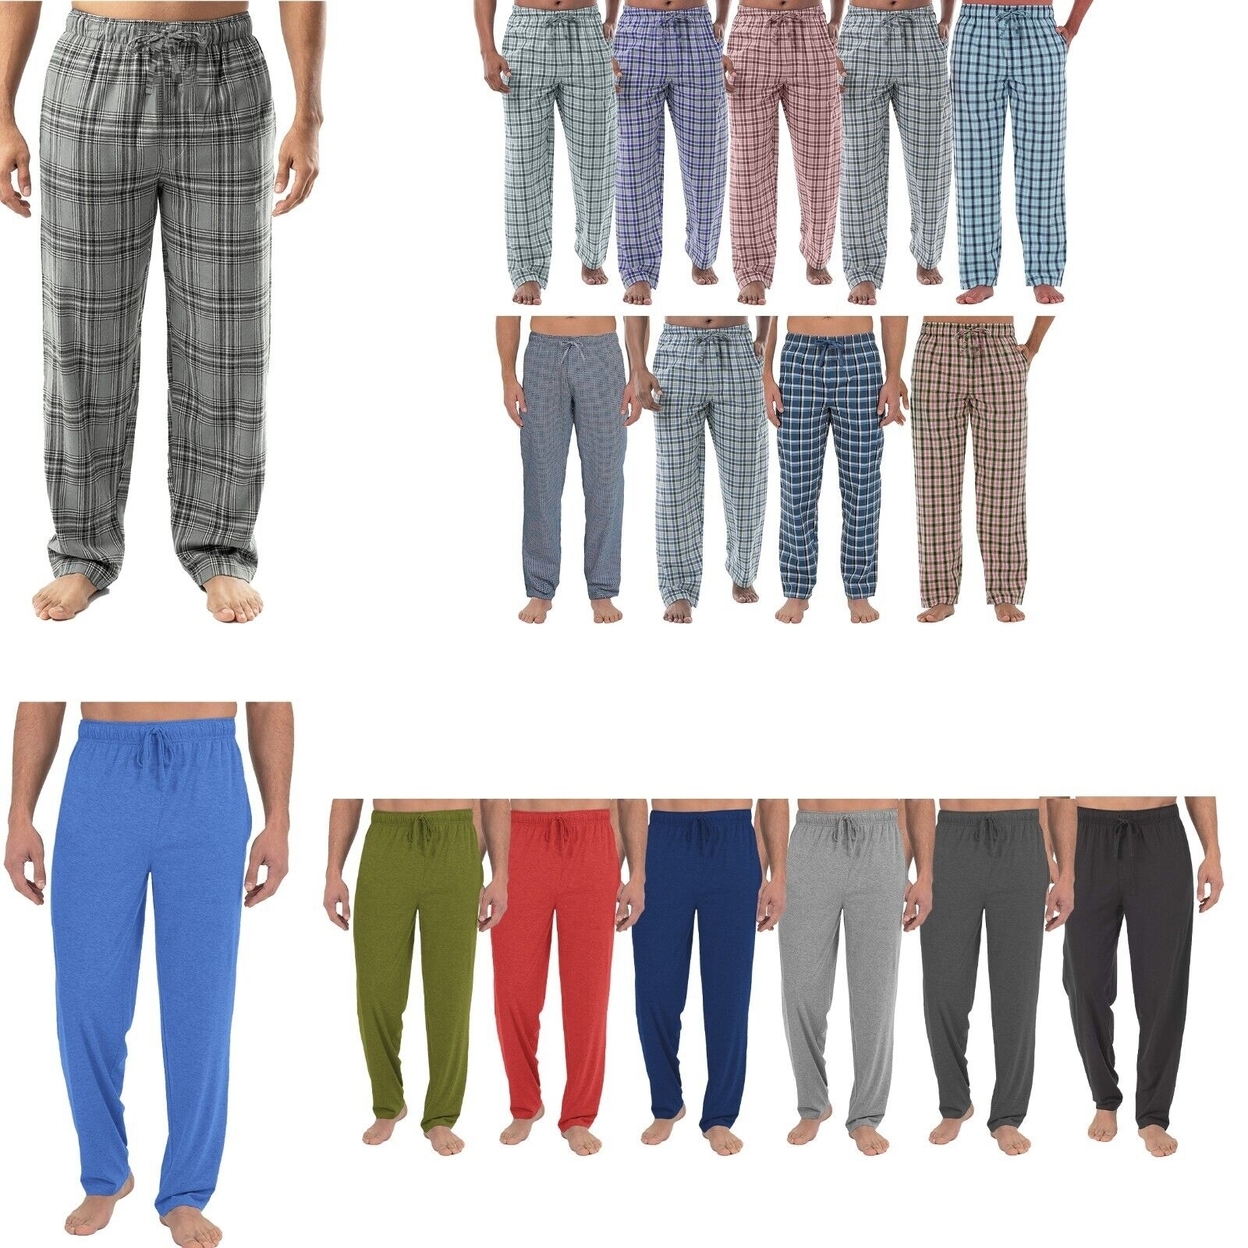 Men's Ultra-Soft Solid & Plaid Cotton Jersey Knit Comfy Sleep Lounge Pajama Pants - Plaid, Small